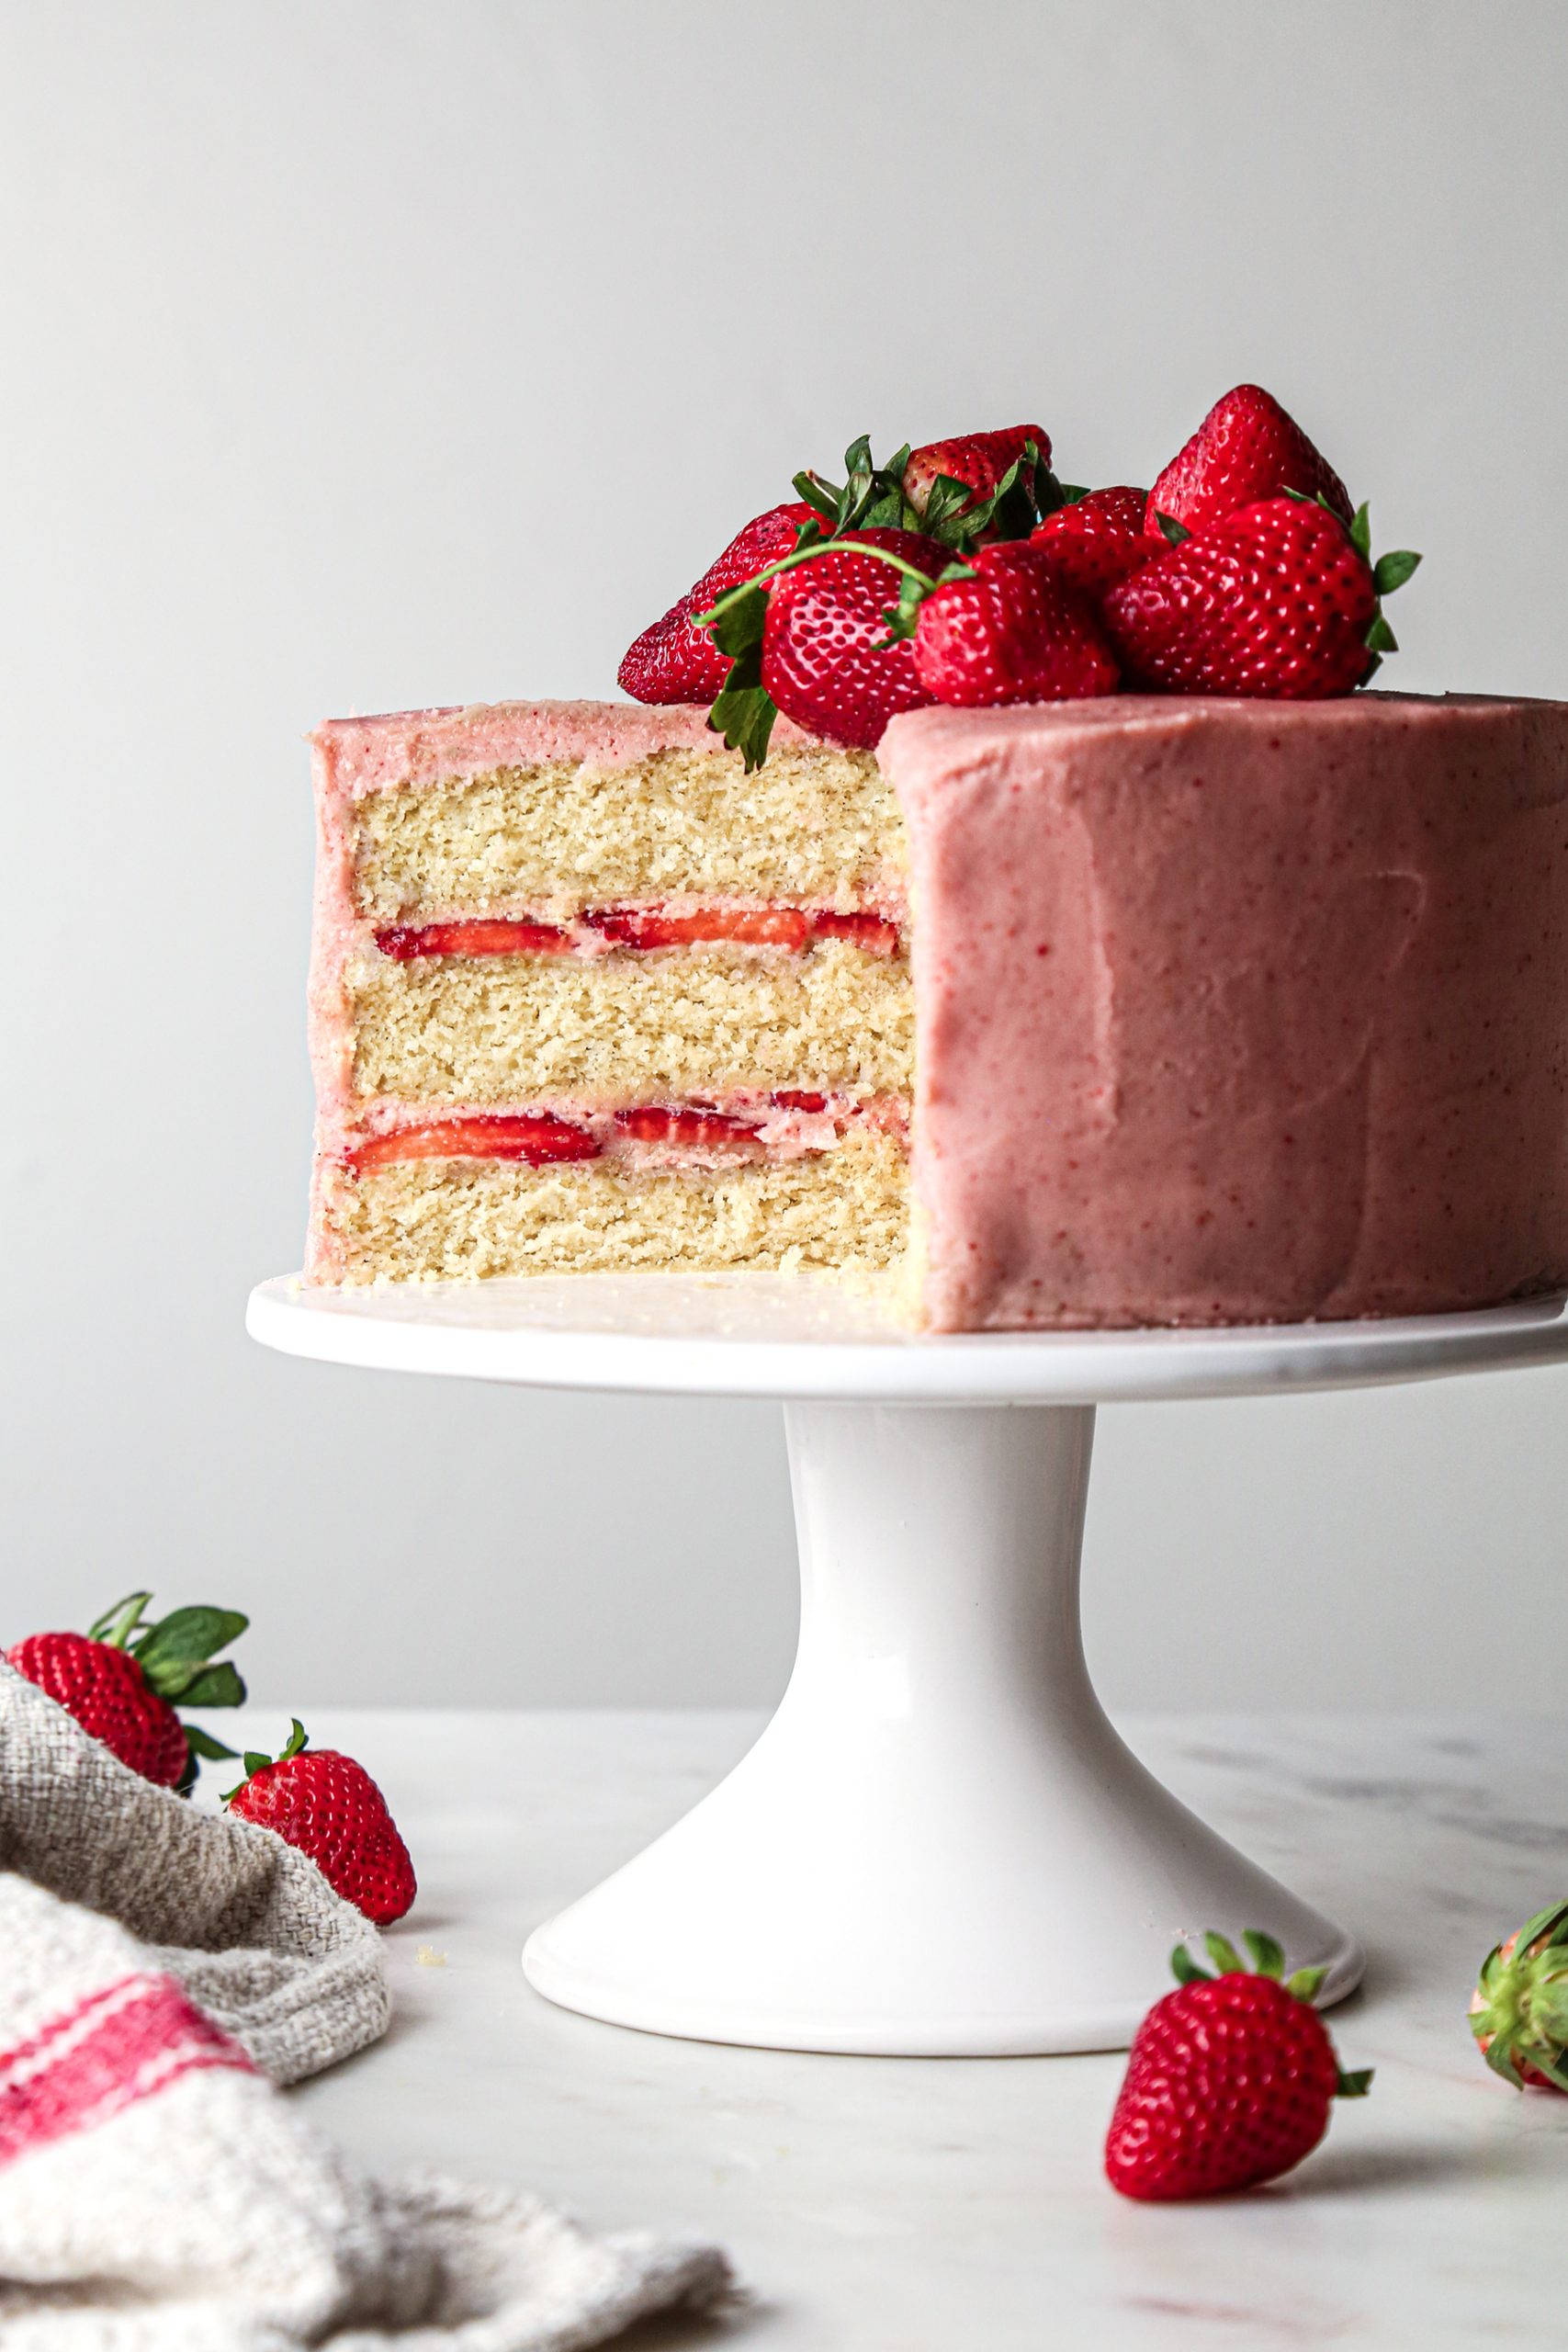 Strawberry Shortcake Recipe: Tips, Variations, and Presentation Ideas